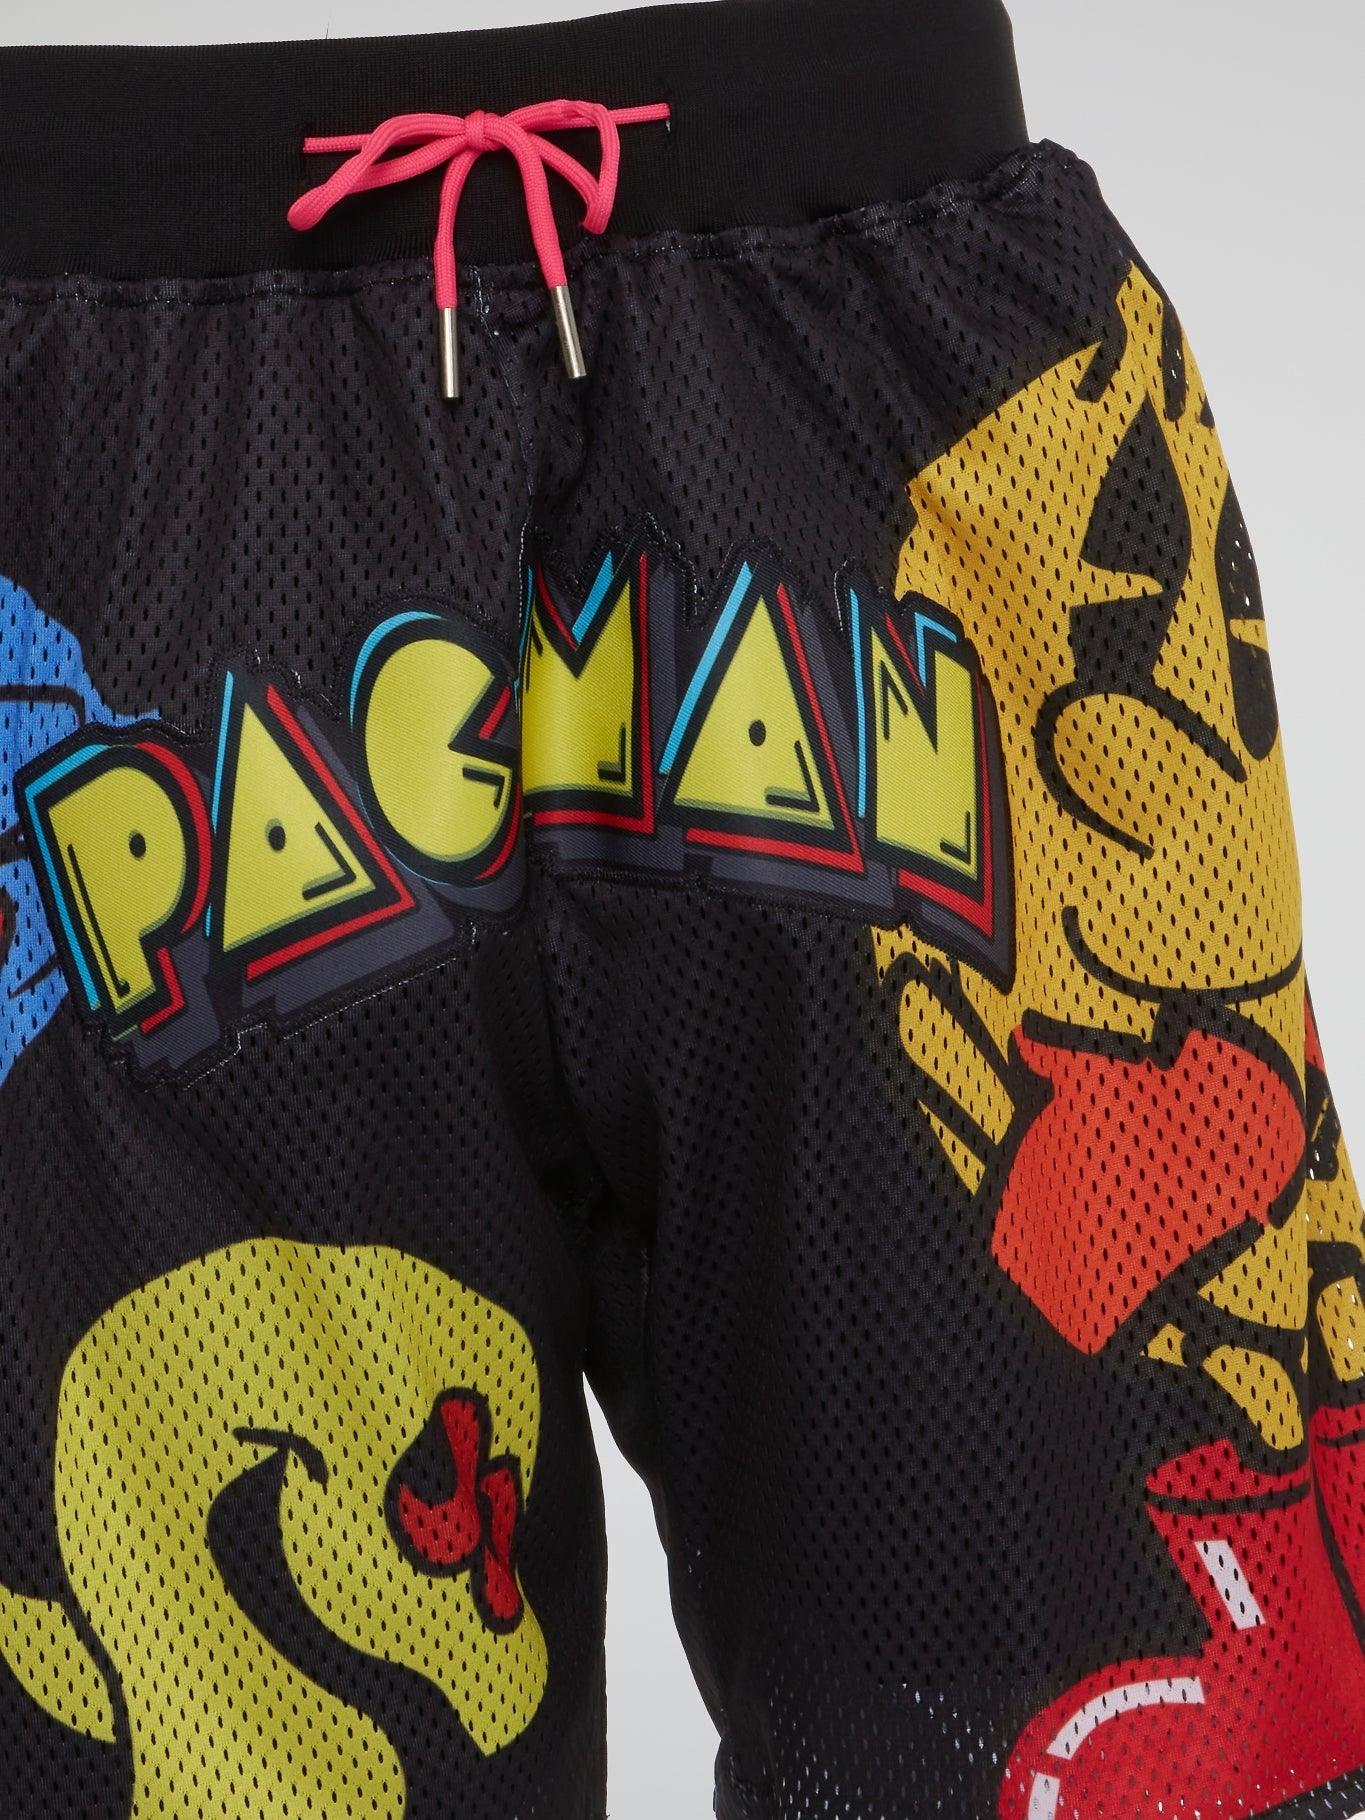 Pacman Black Shorts - B-Hype Society